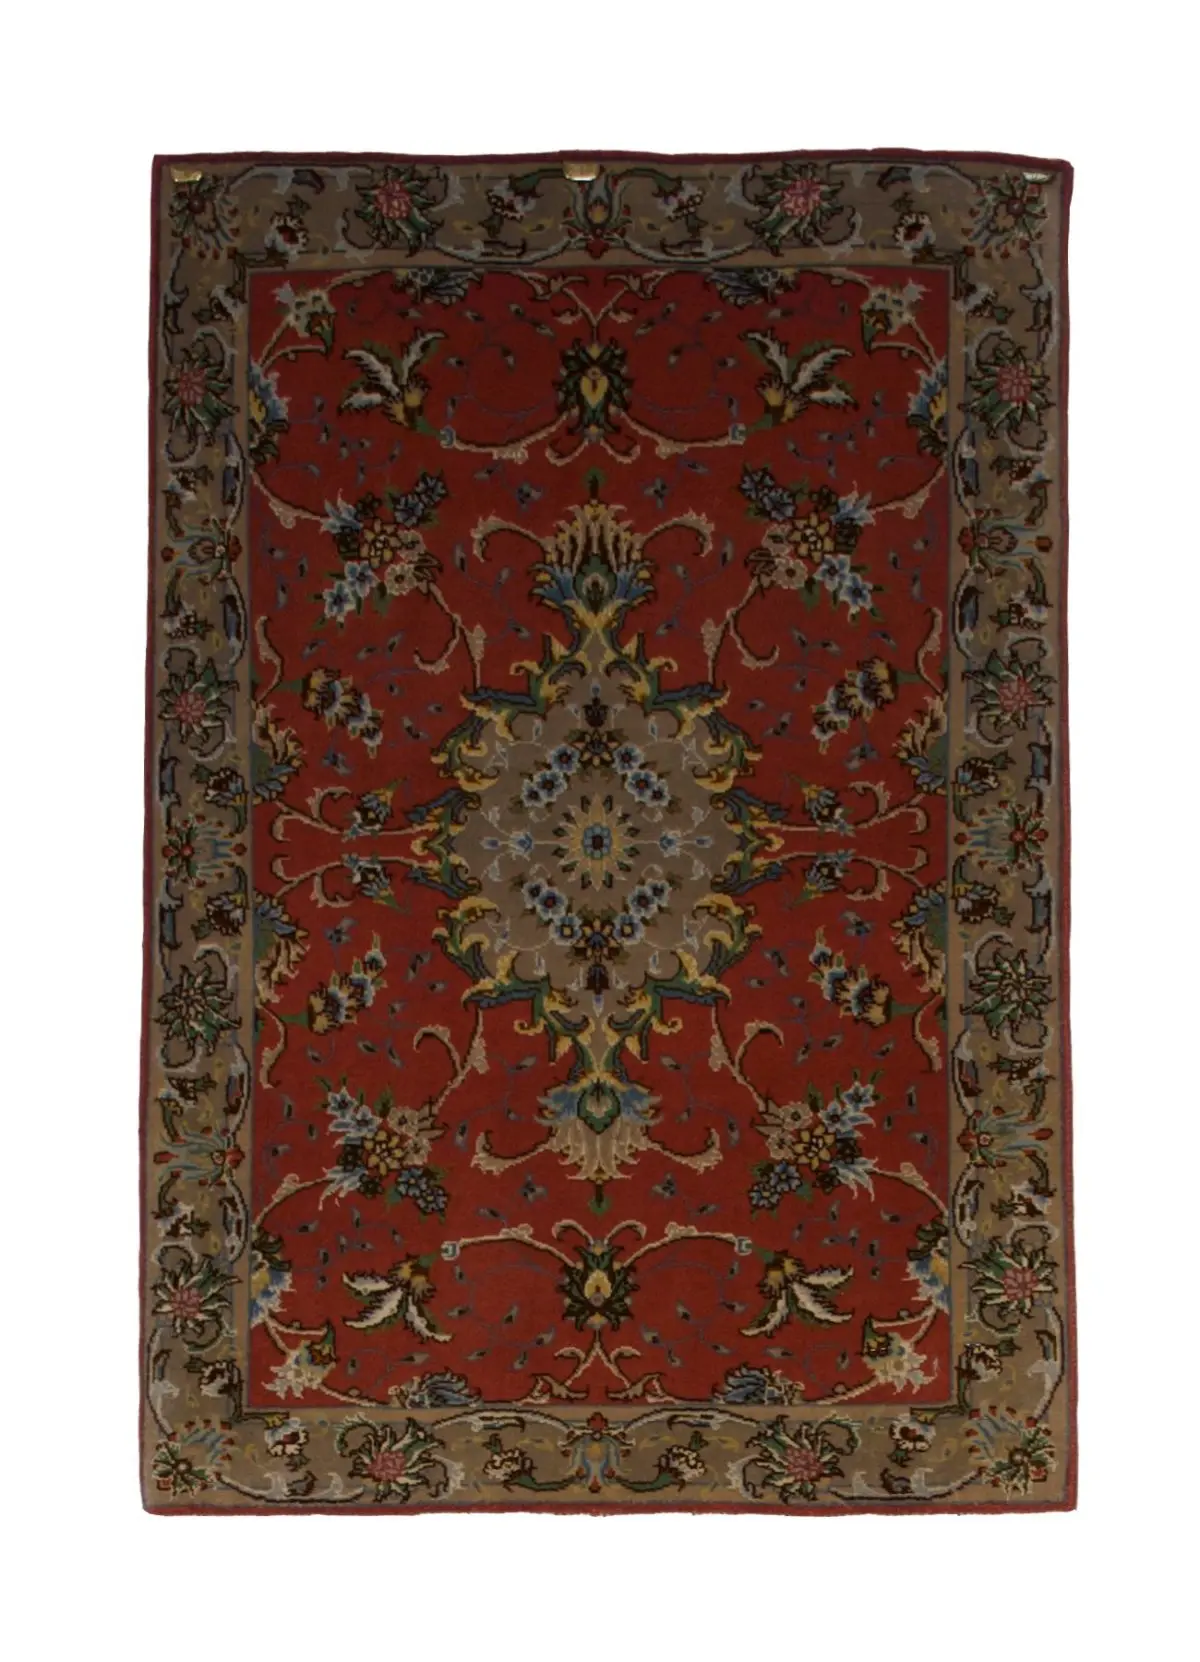 Persian Tabriz rug 2' x 3' Handmade Area Rug - Shabahang Royal Carpet